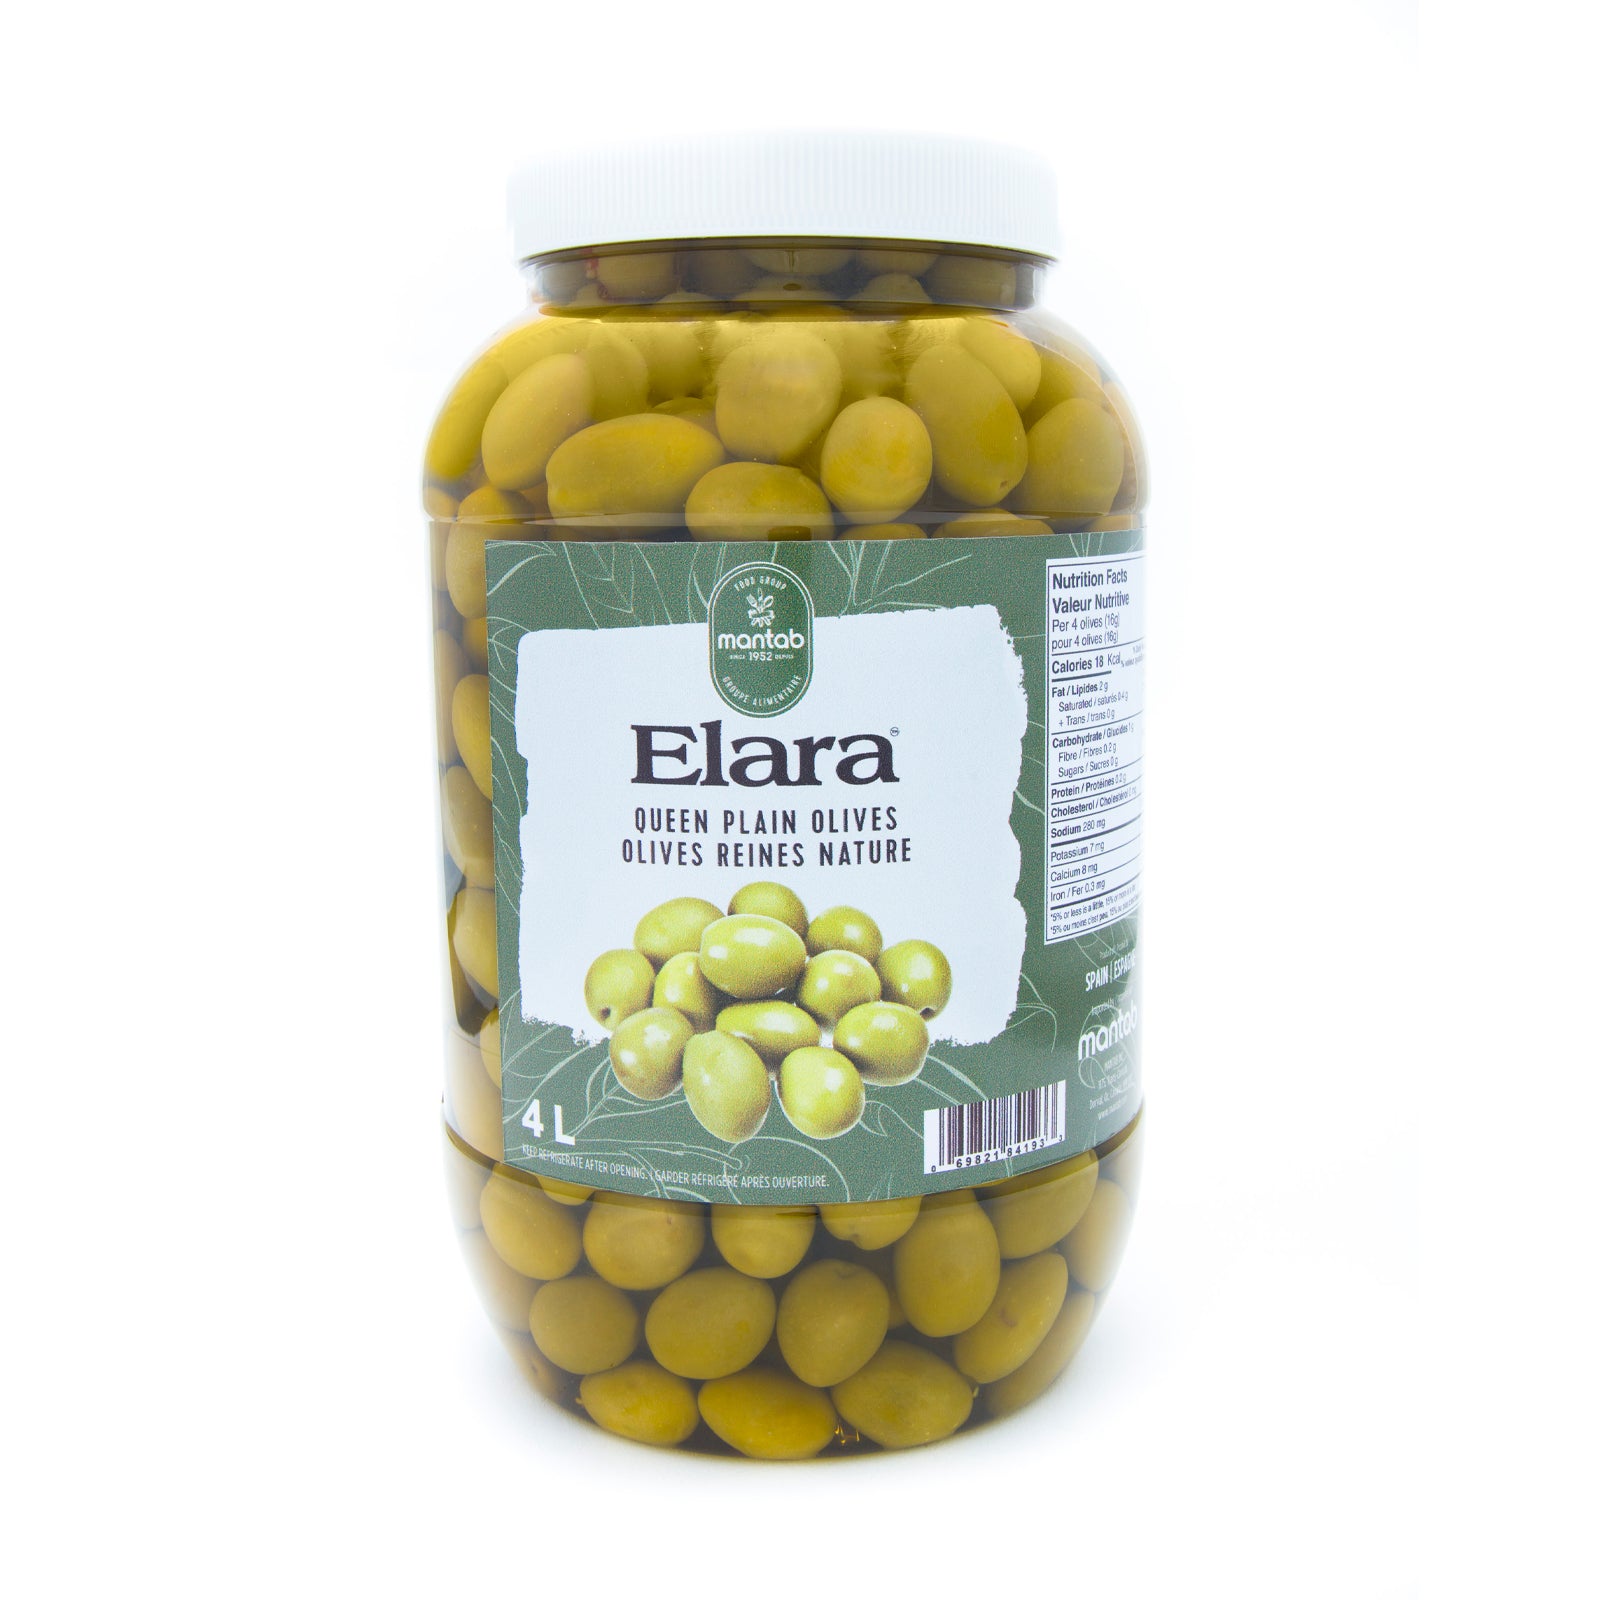 Elara Queen Plain Olives